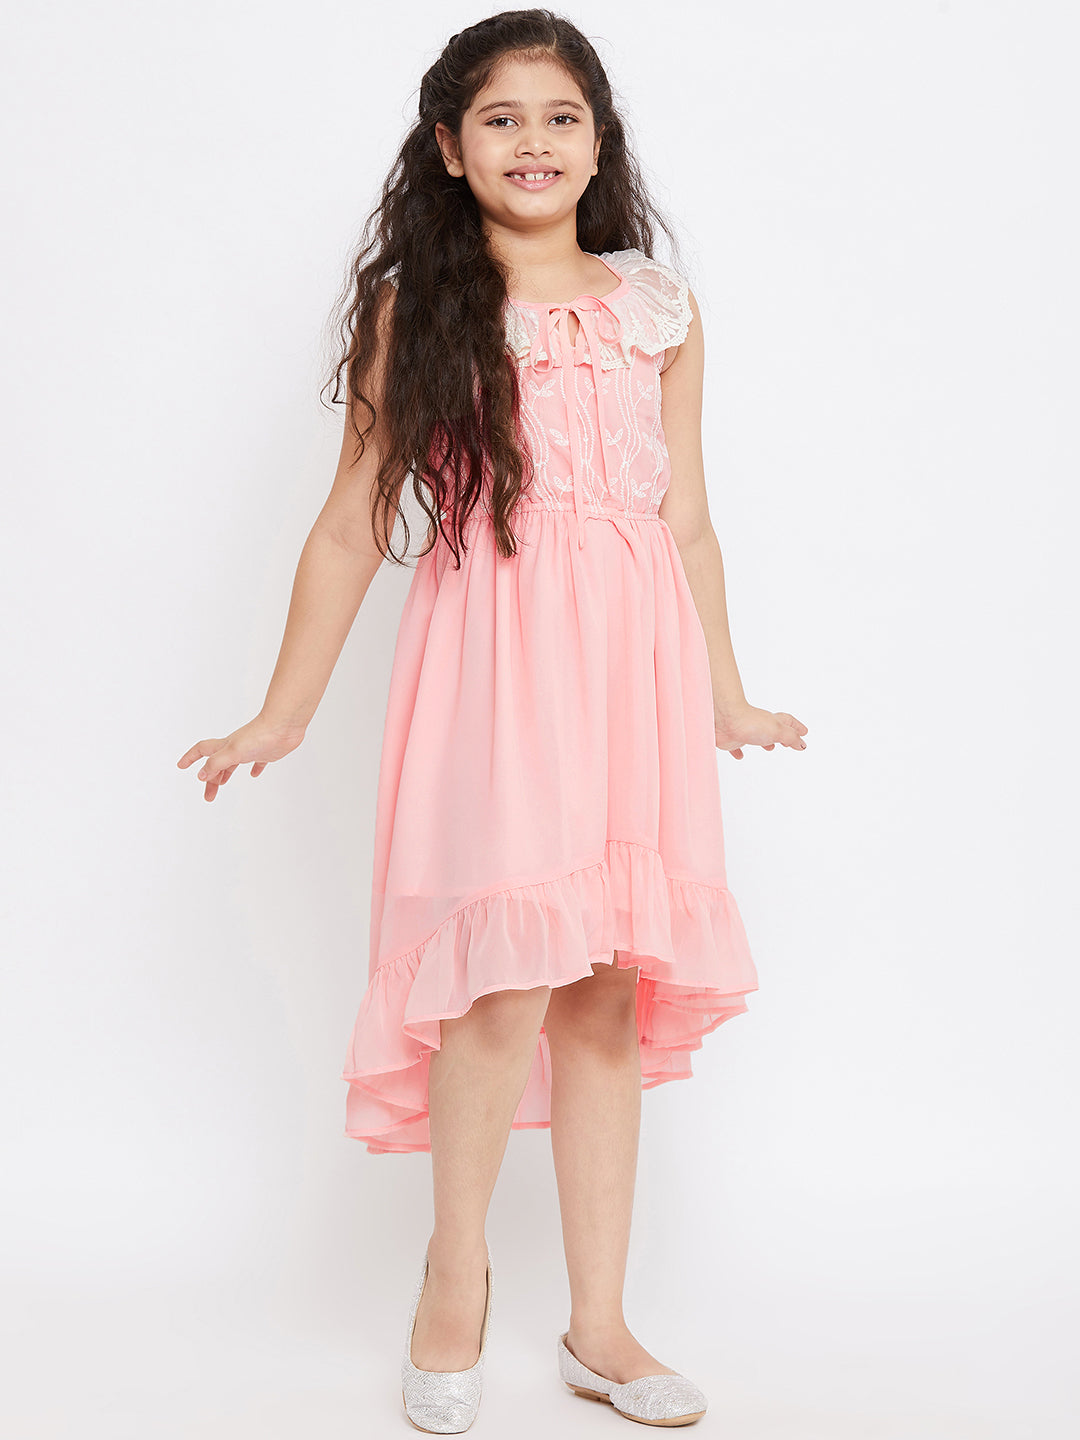 Girl's Embroidery Dress Pink - StyloBug KIDS